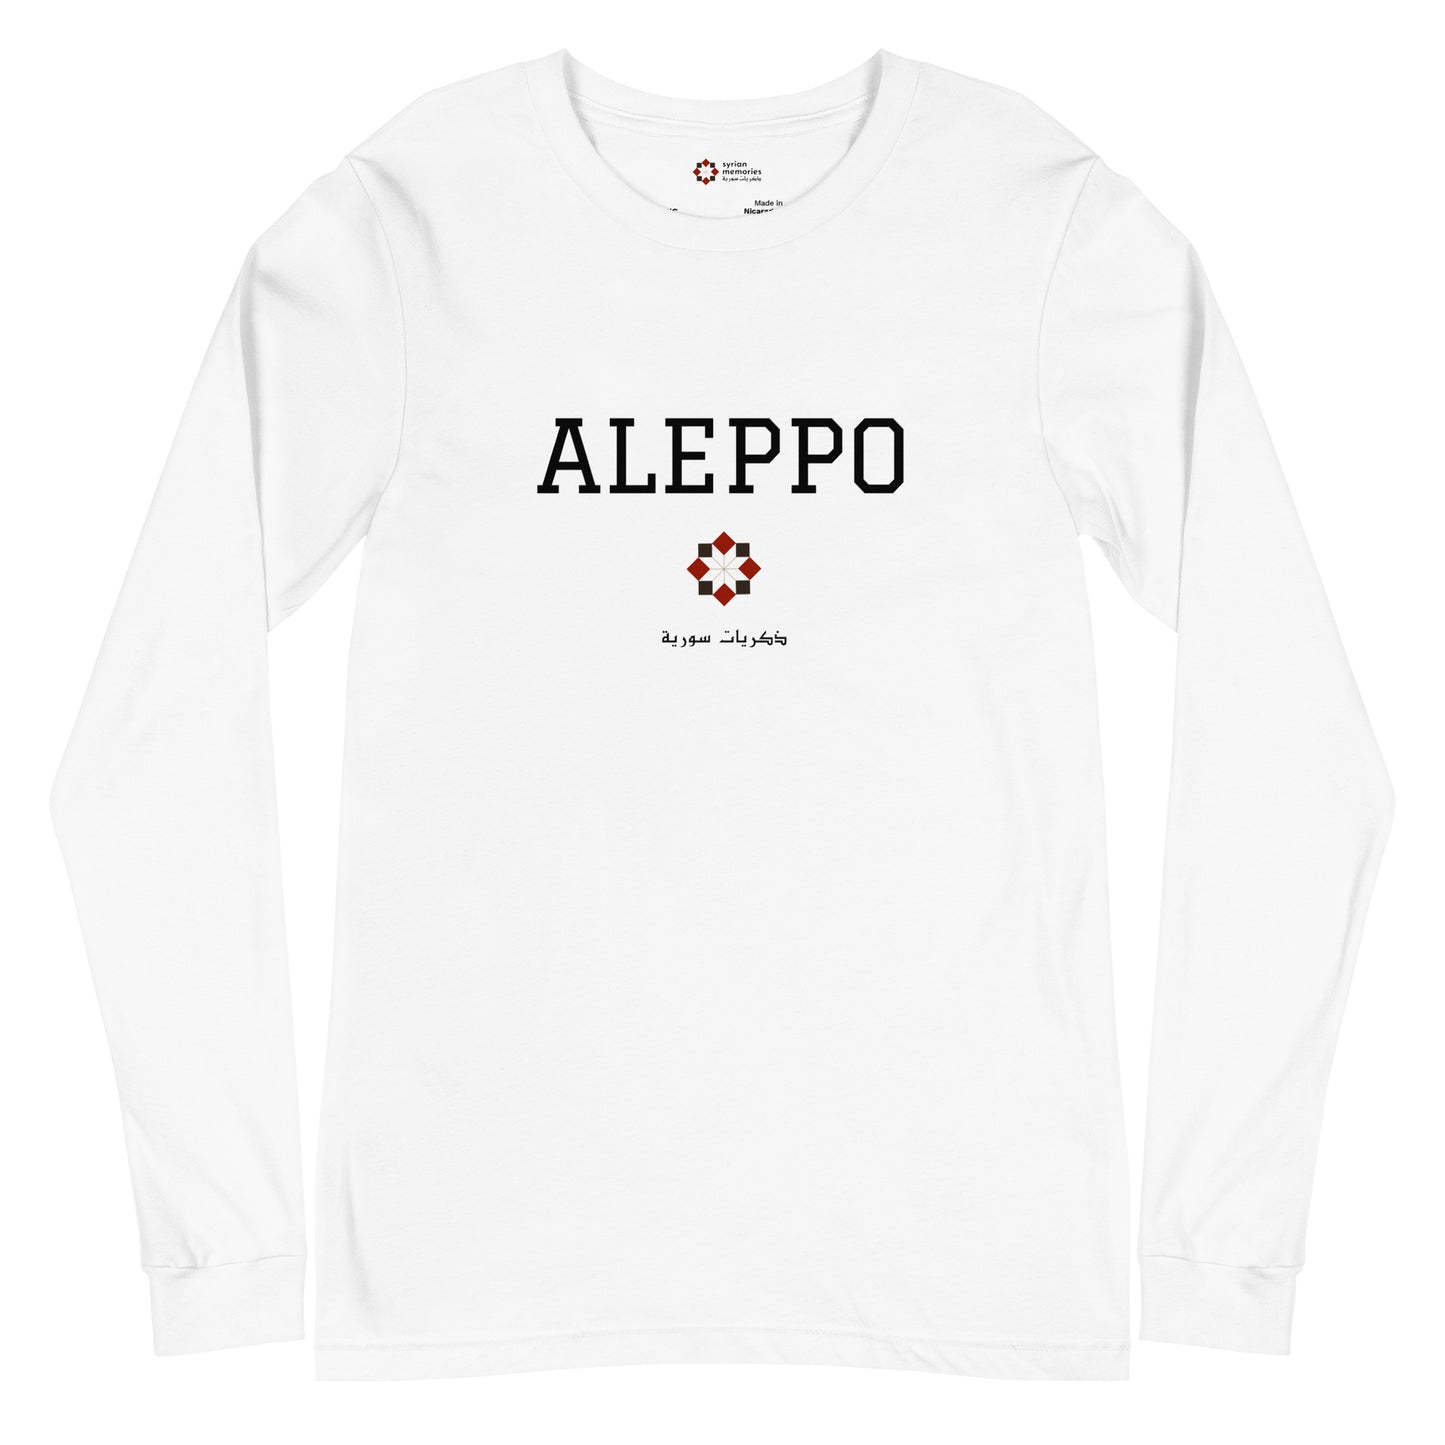 Aleppo - University Collection - Unisex Long Sleeve Tee